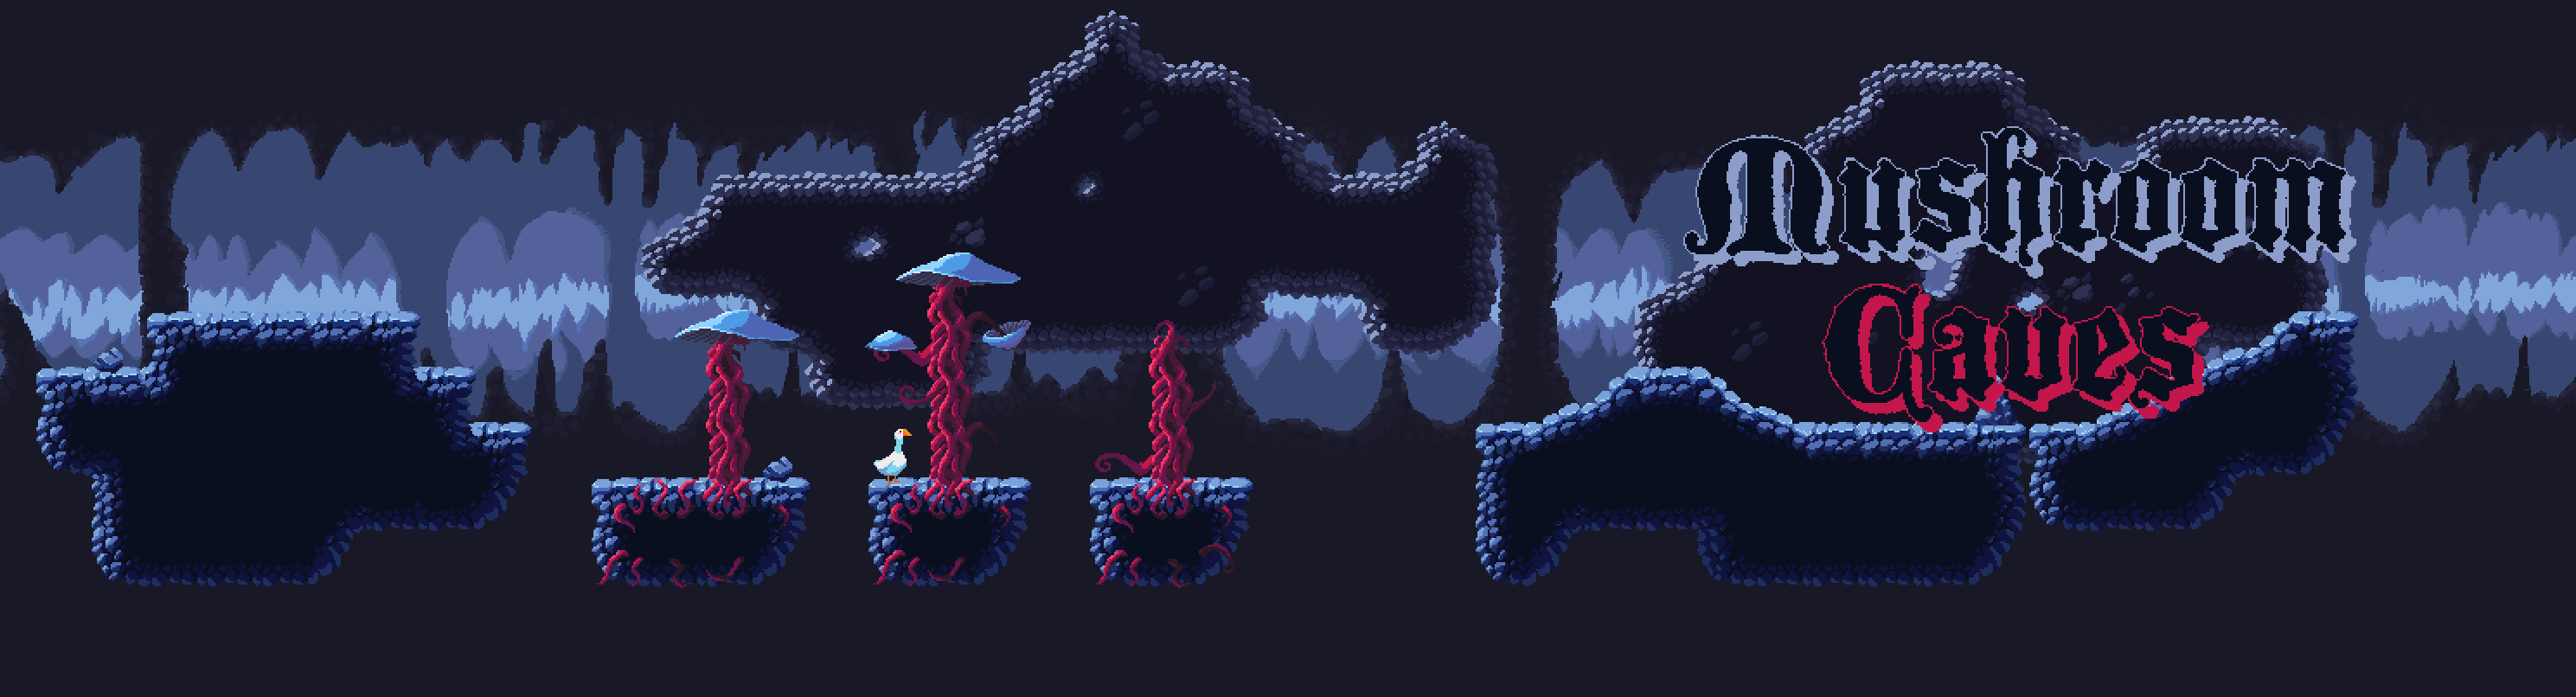 Pixel art Mushroom Caves